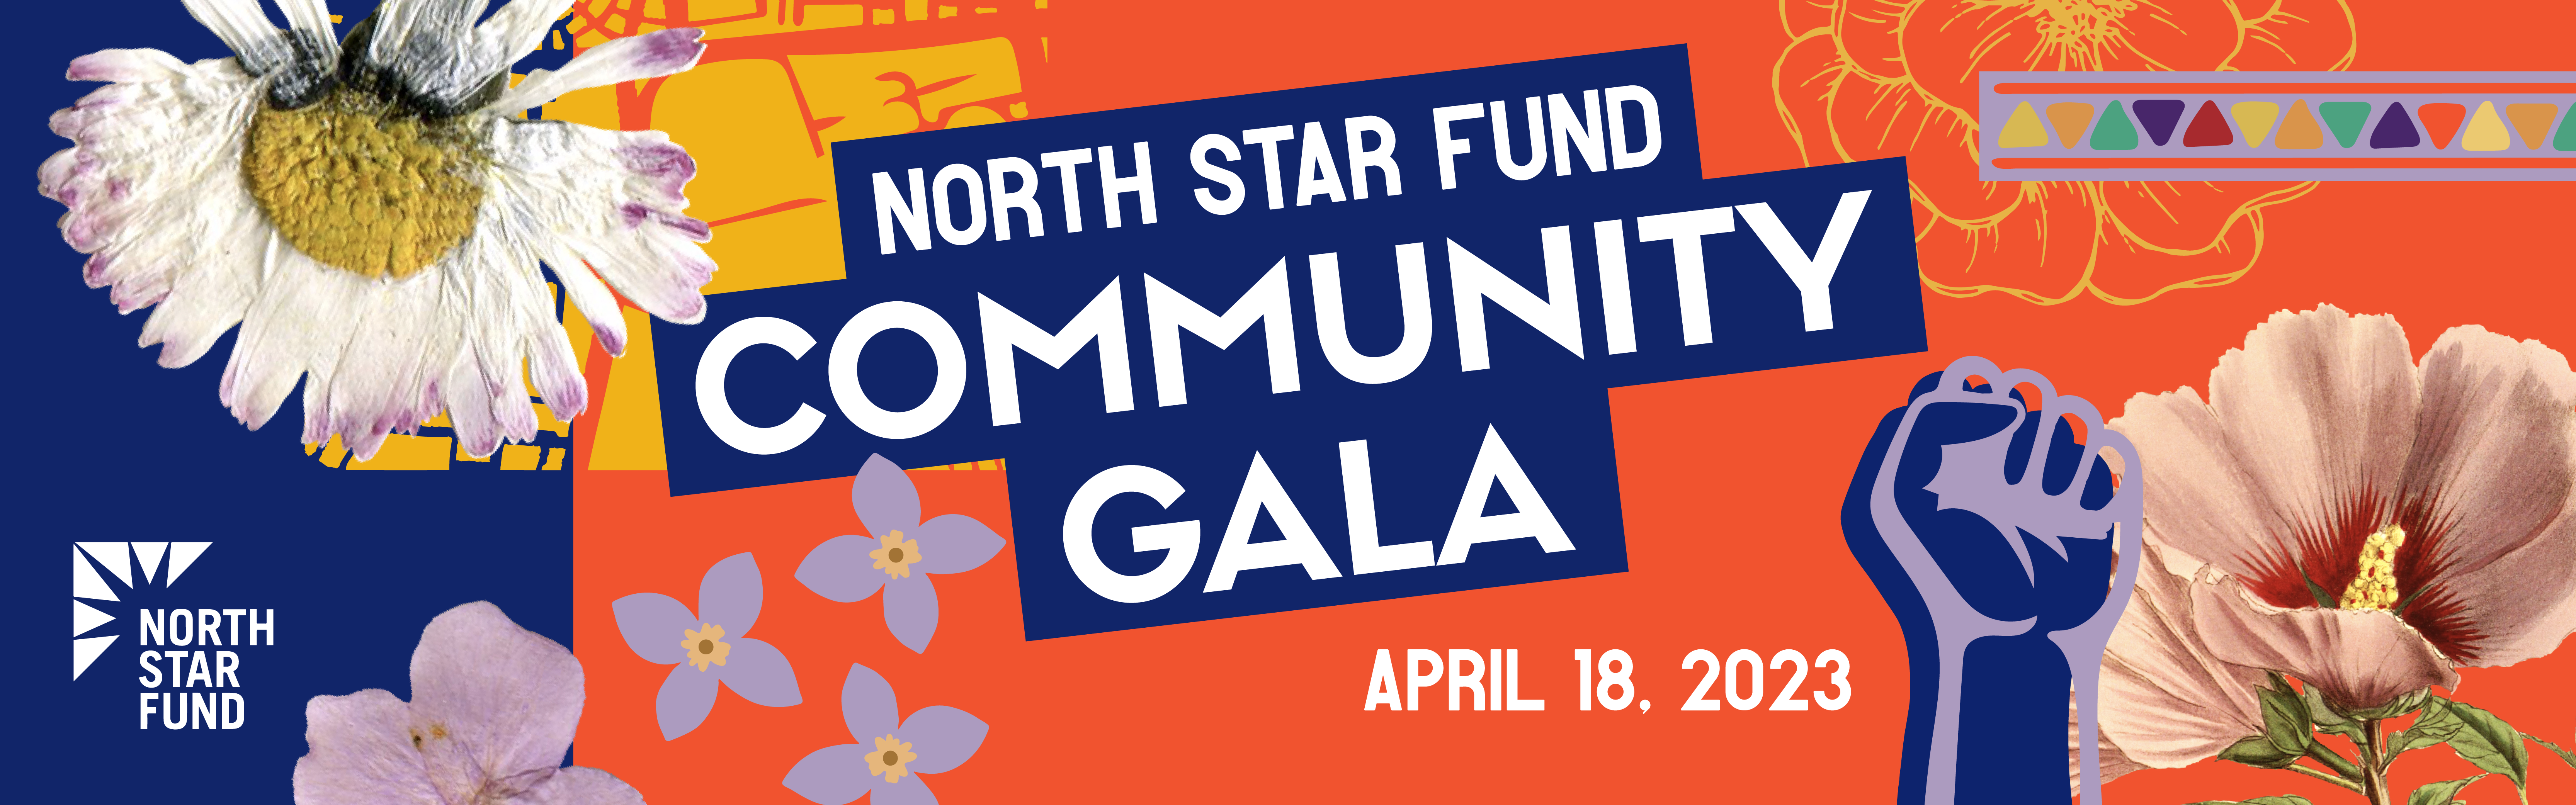 North Star Fund Community Gala — April 18, 2023